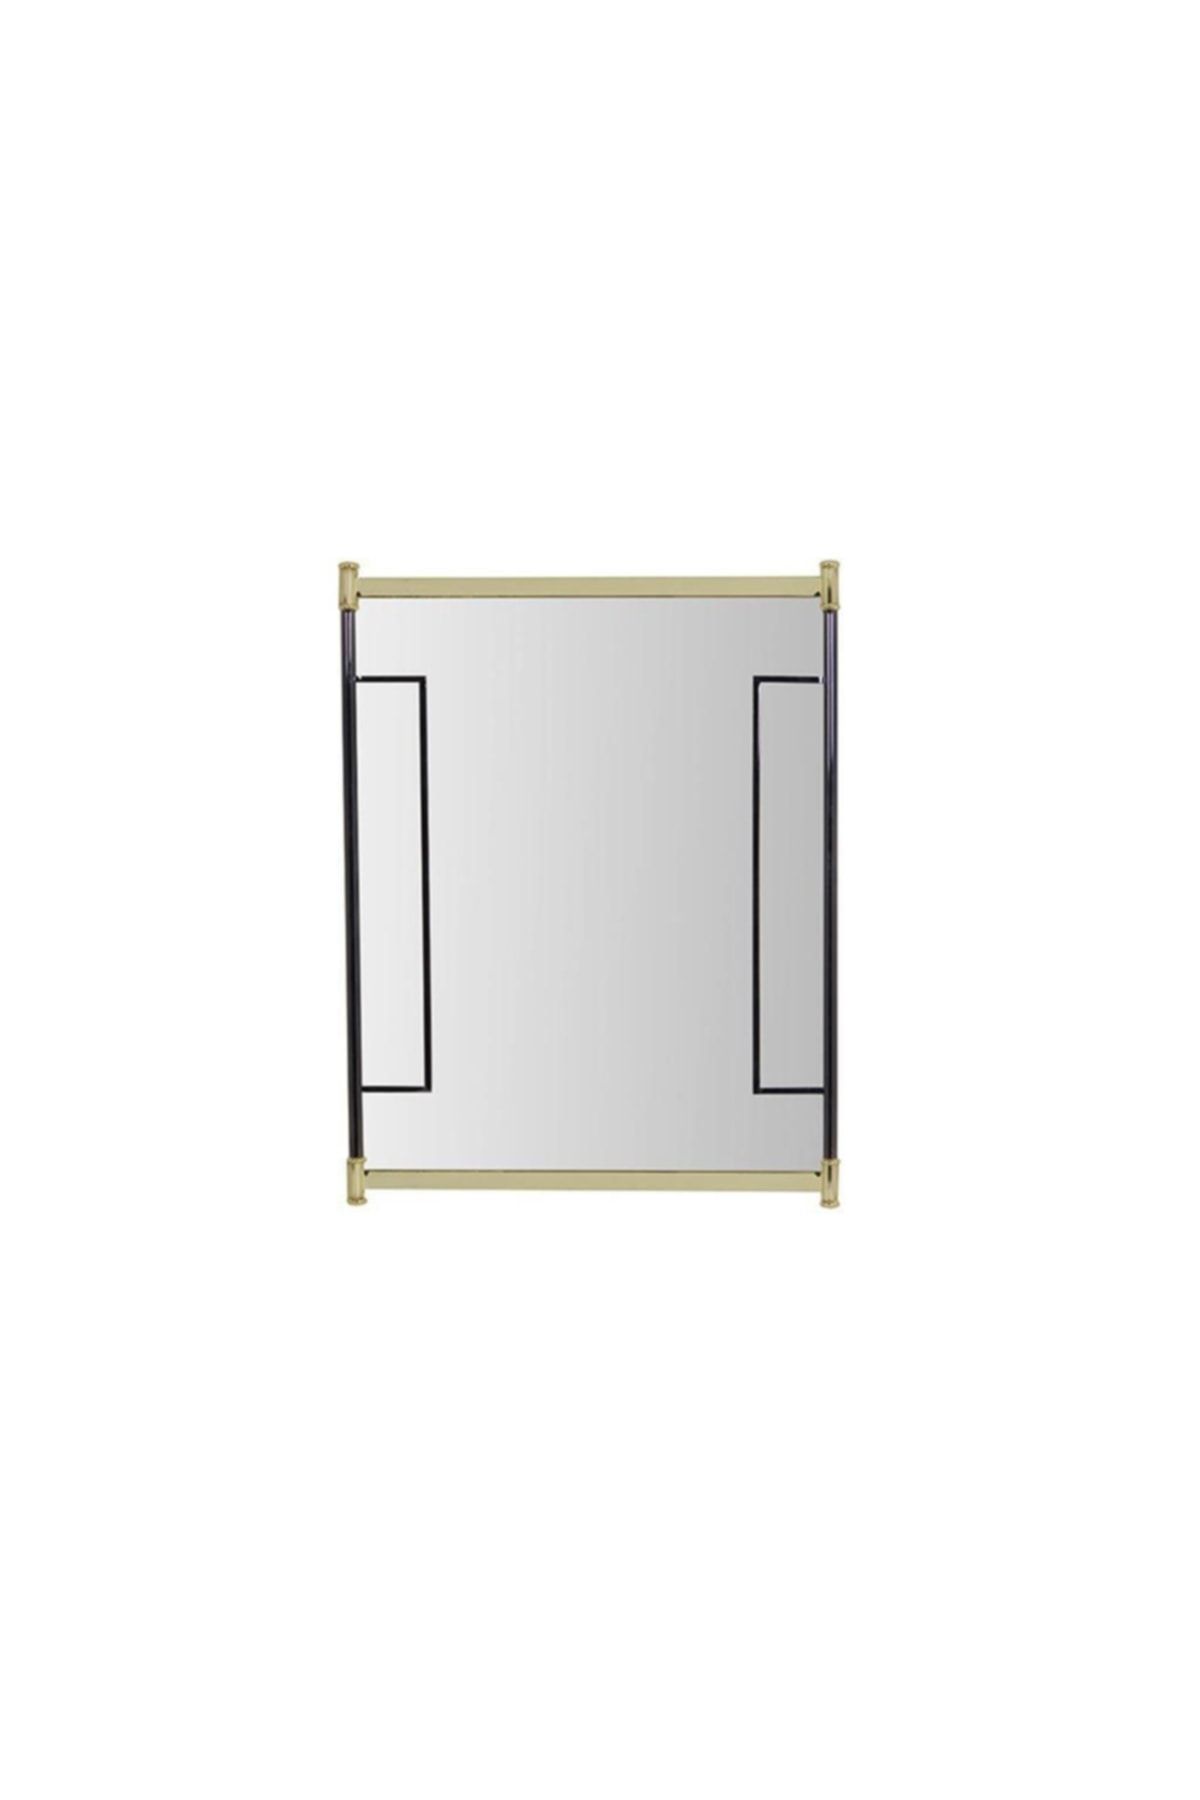 Fidex Home Modern Tasarımlar Metal Ayna Altın - Krom 88cm